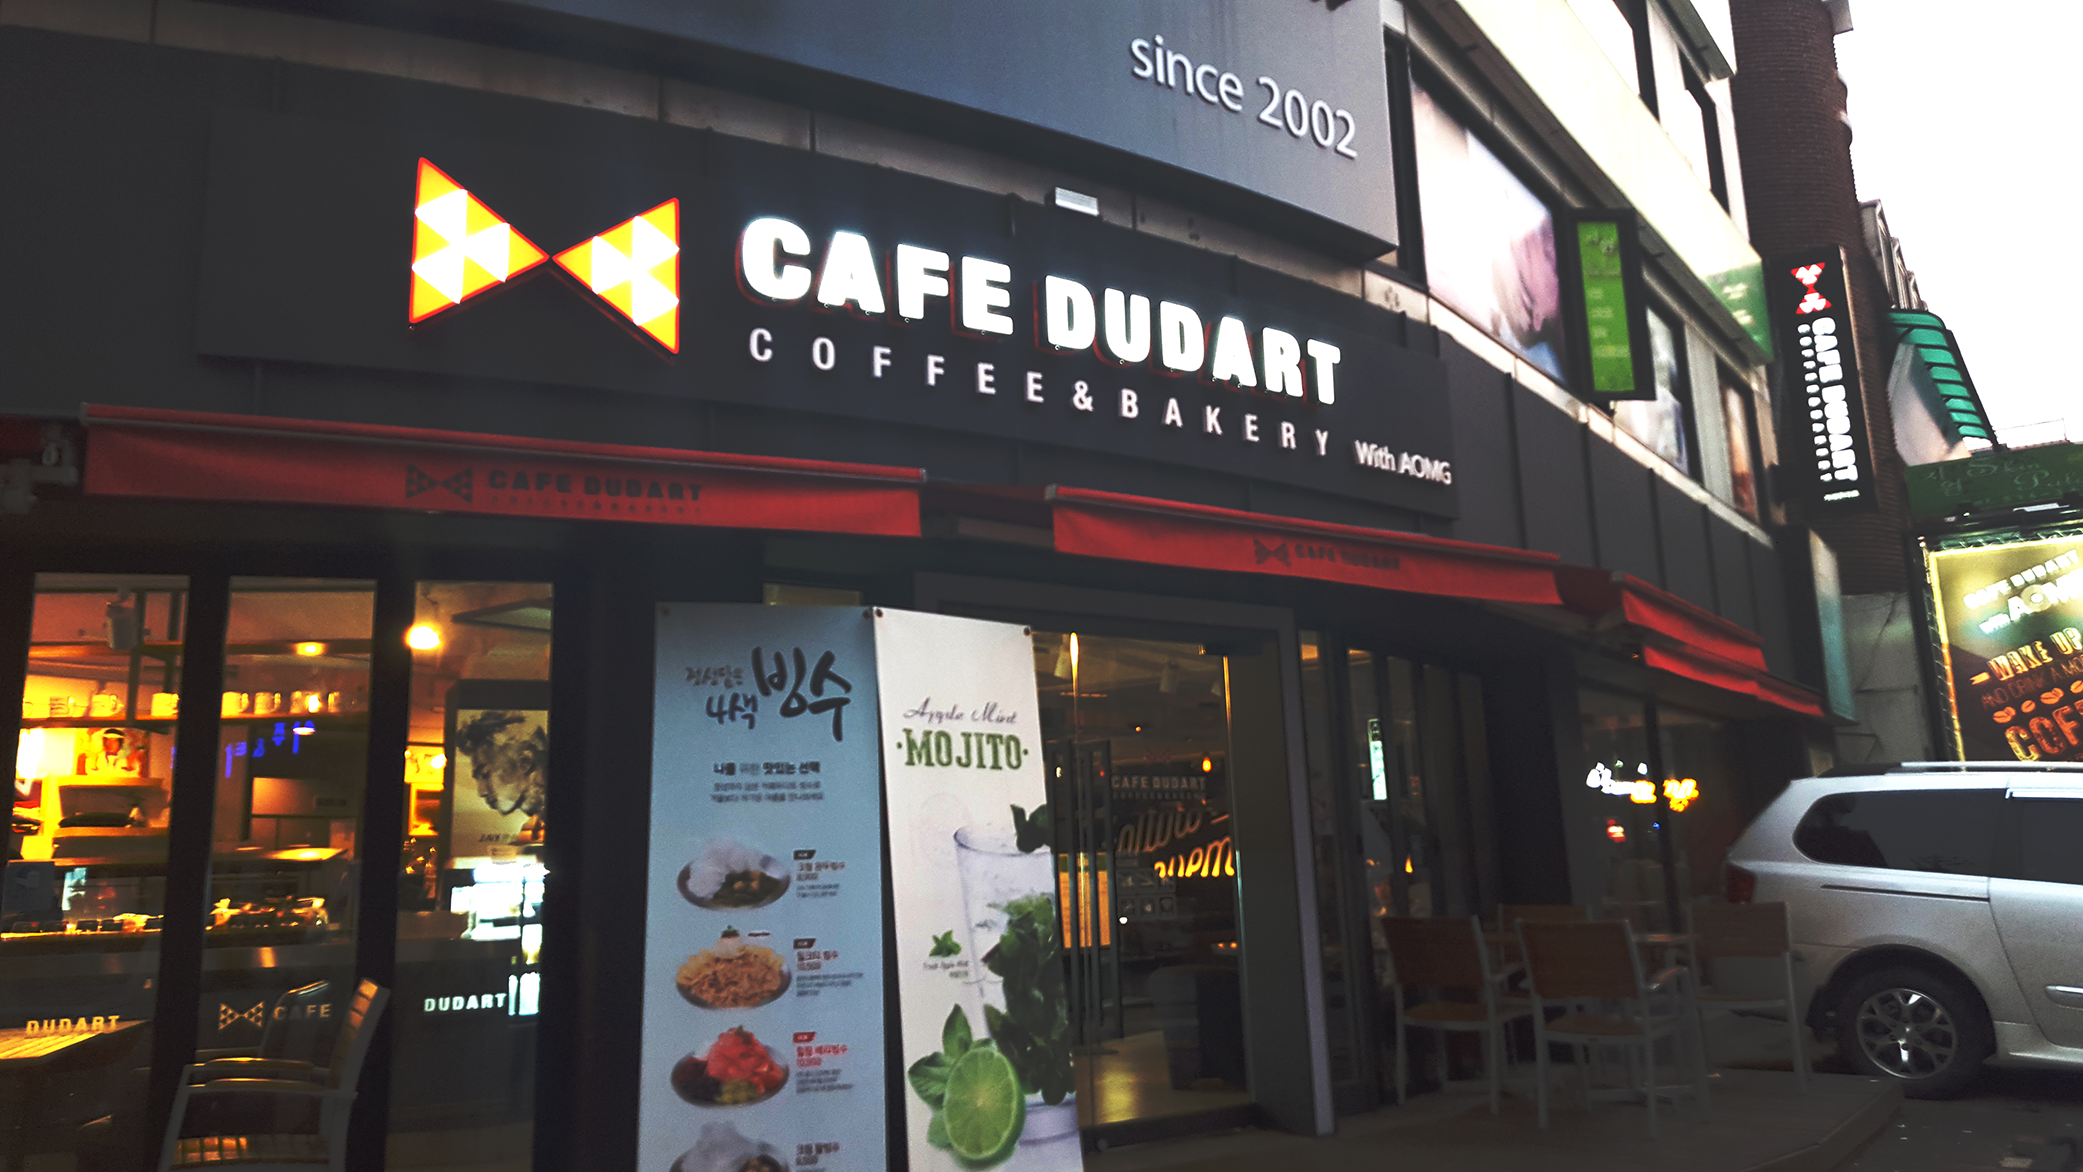 Outside of Cafe Dudart